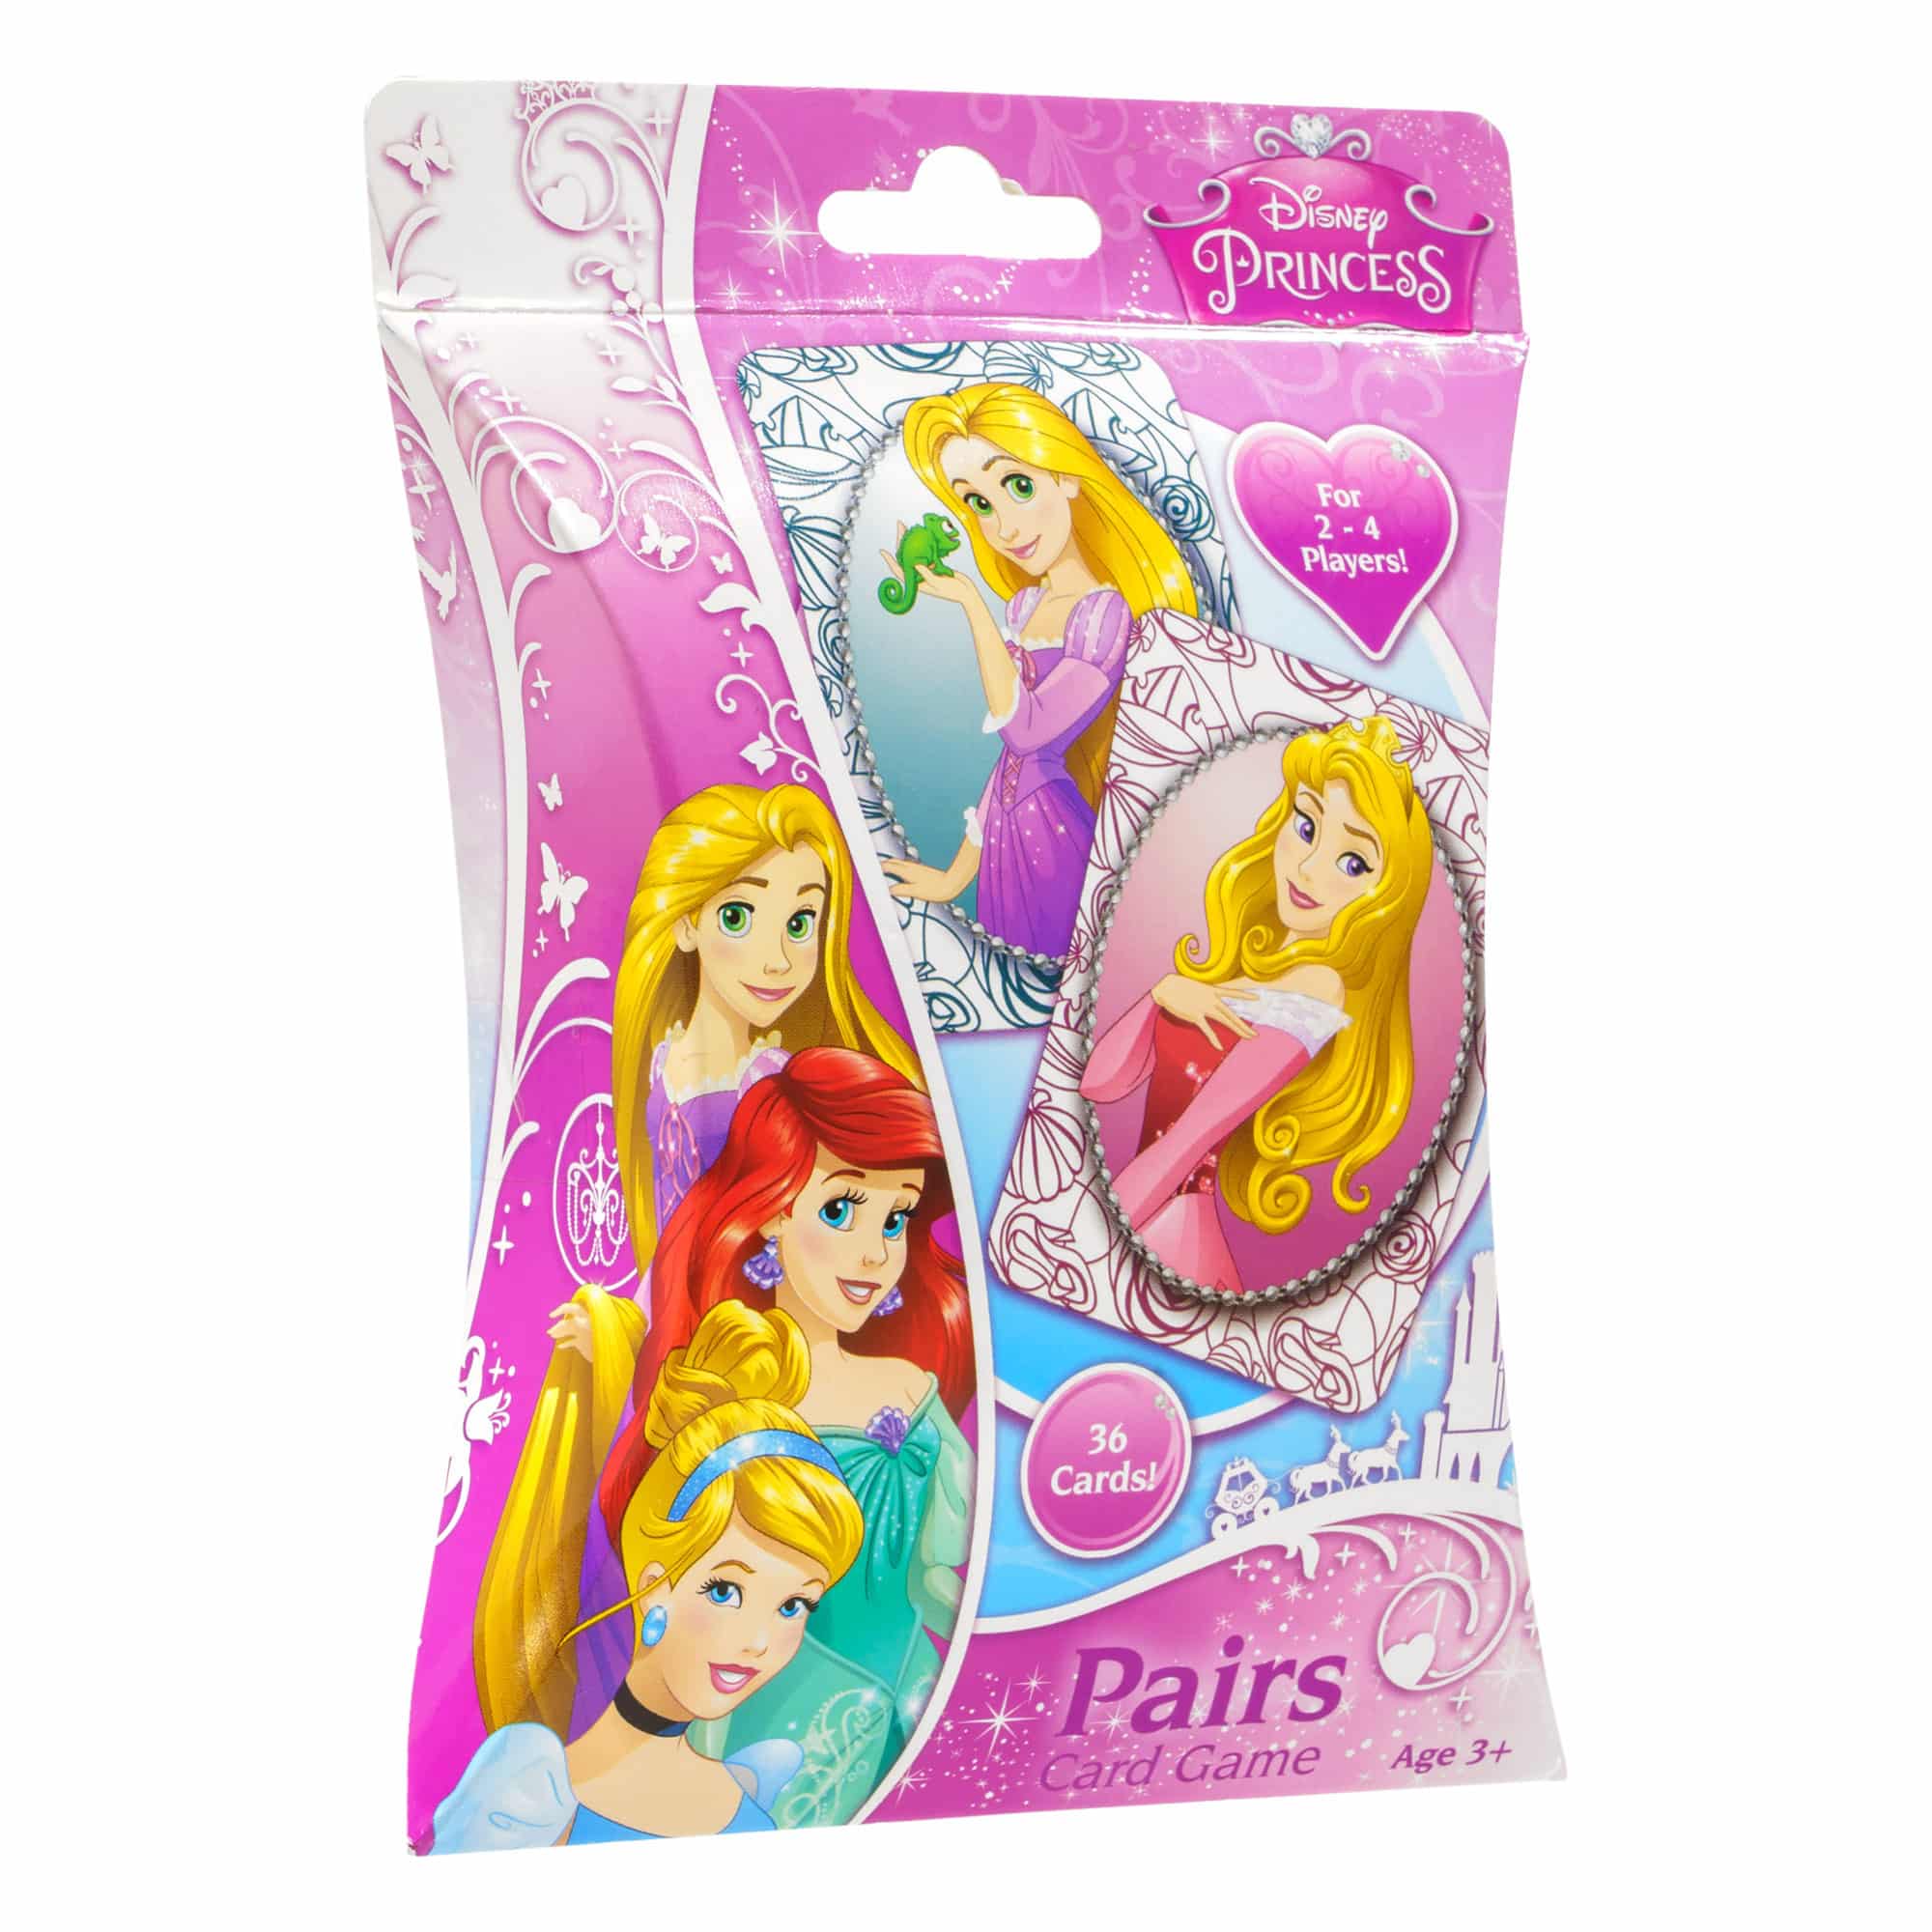 Disney Princess - Pairs Card Game